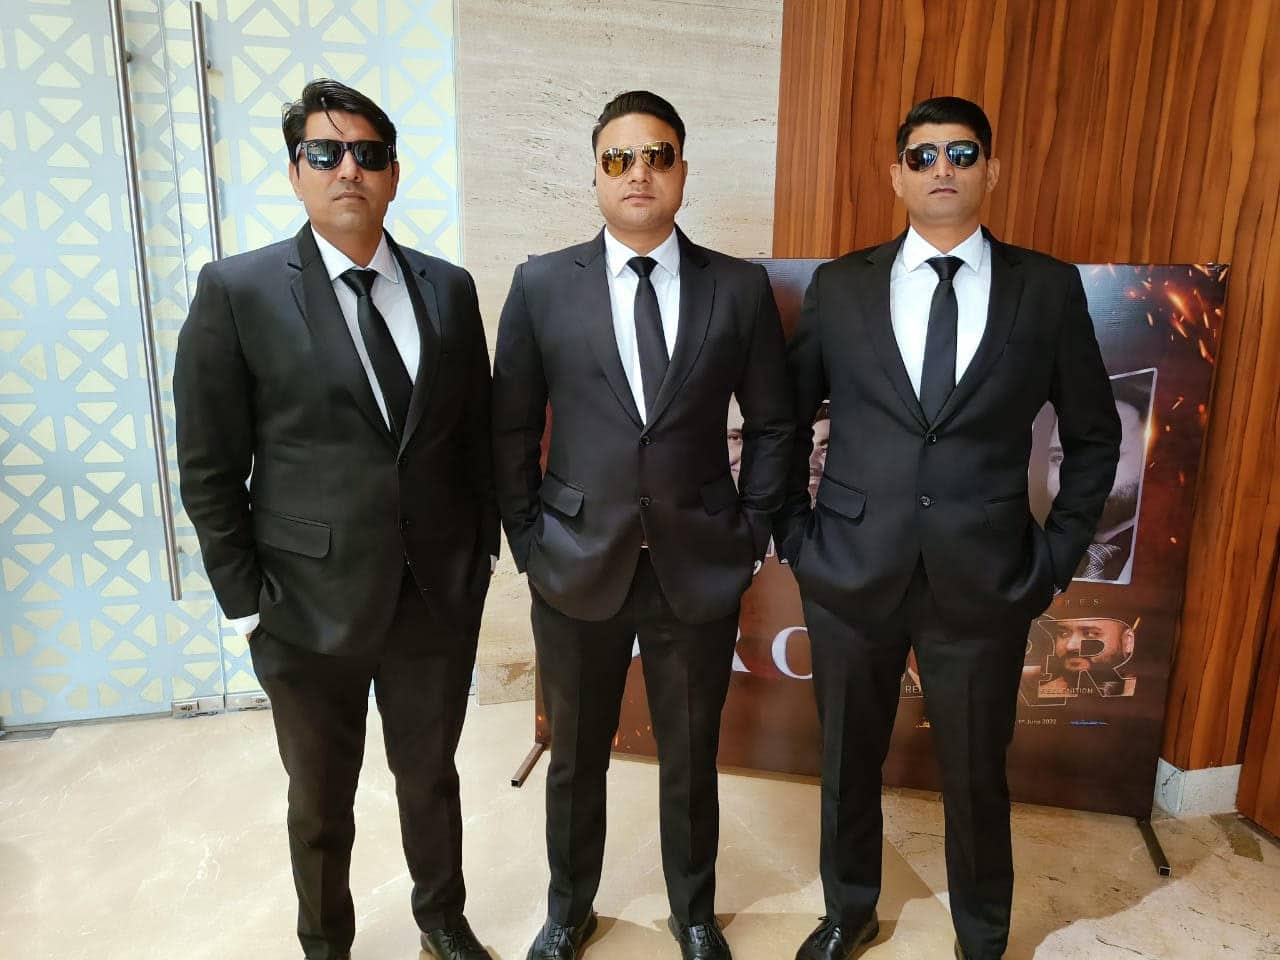 Best dressed Ex-men armed for security in Delhi and Mumbai